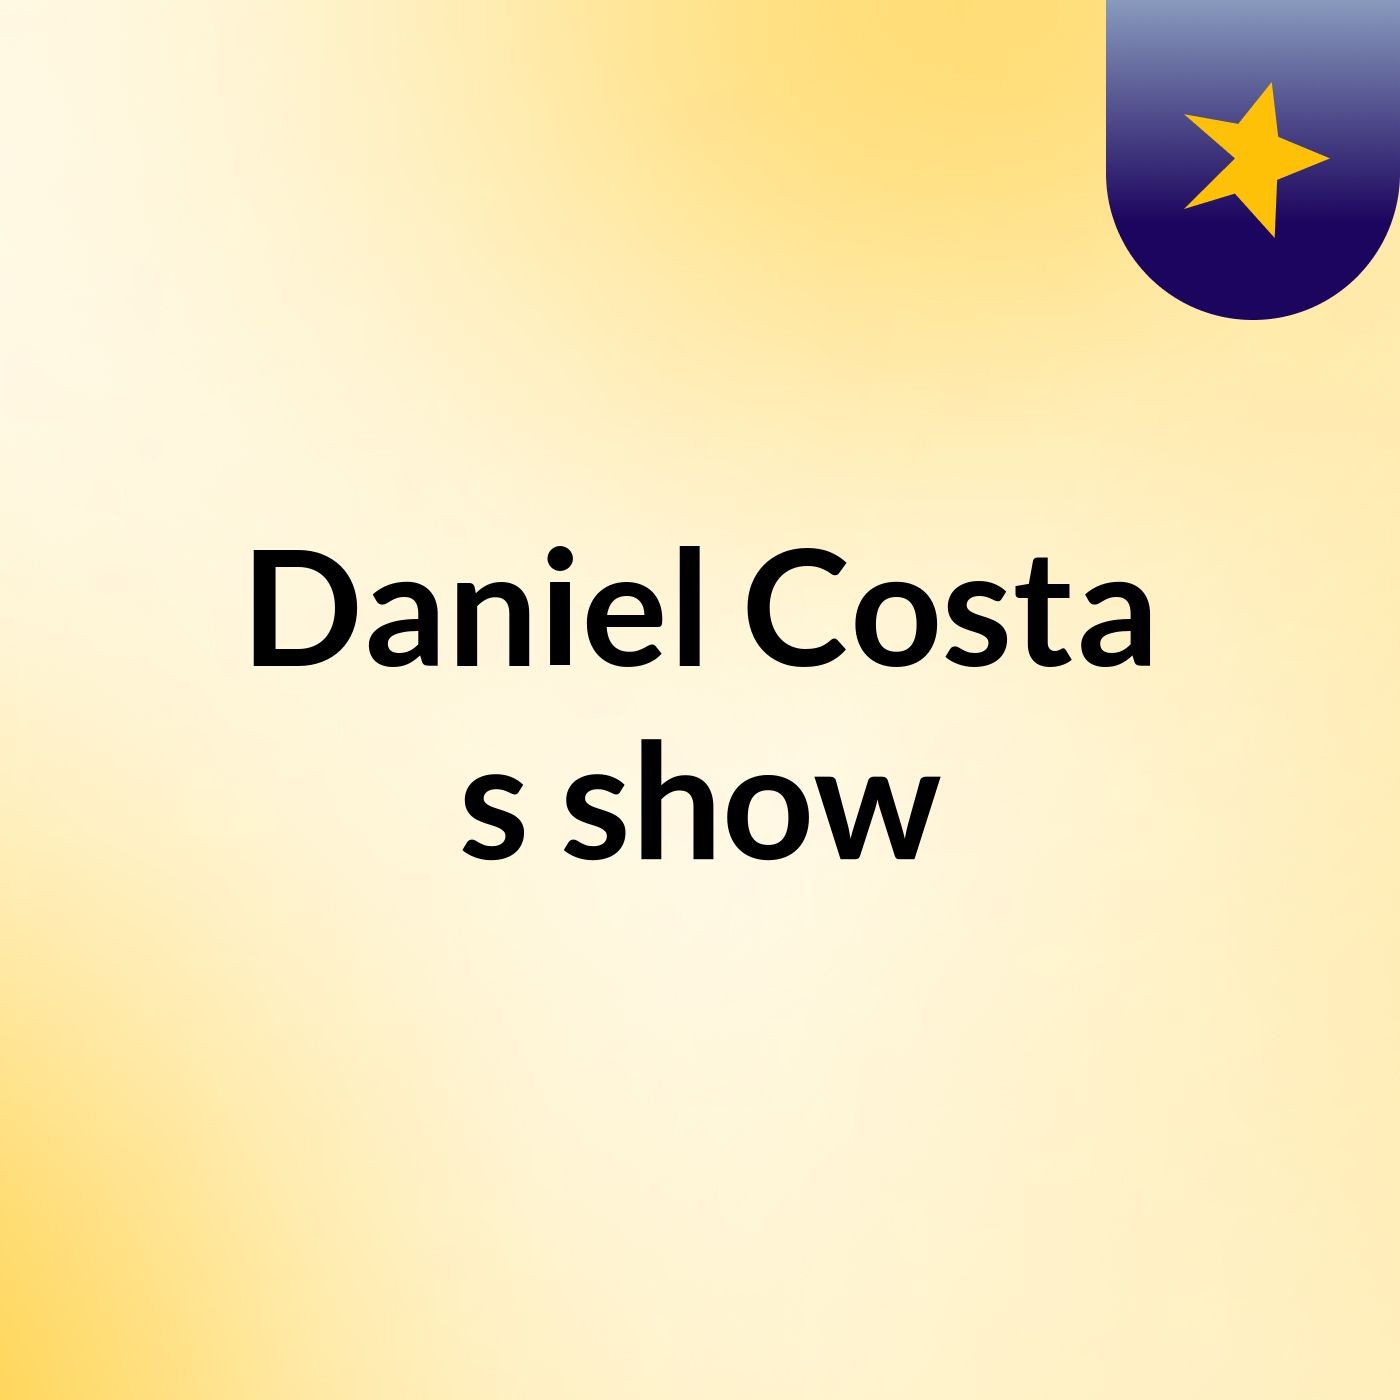 Daniel Costa's show